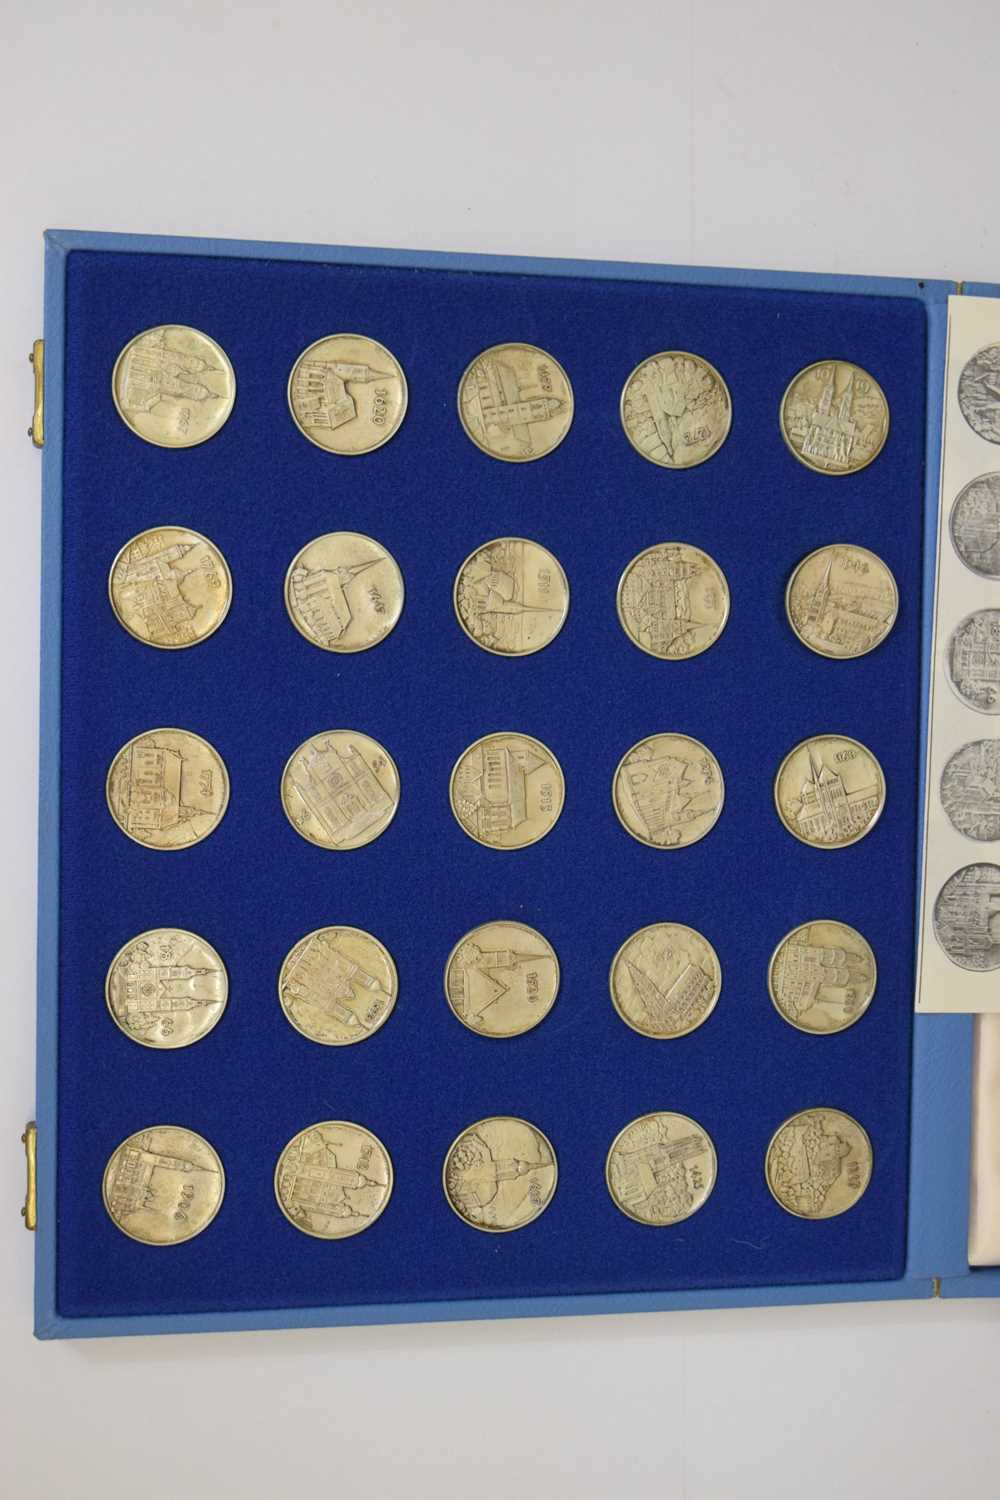 Numis Luzern limited edition 25 silver medallion set celebrating Swiss Churches - Image 3 of 11